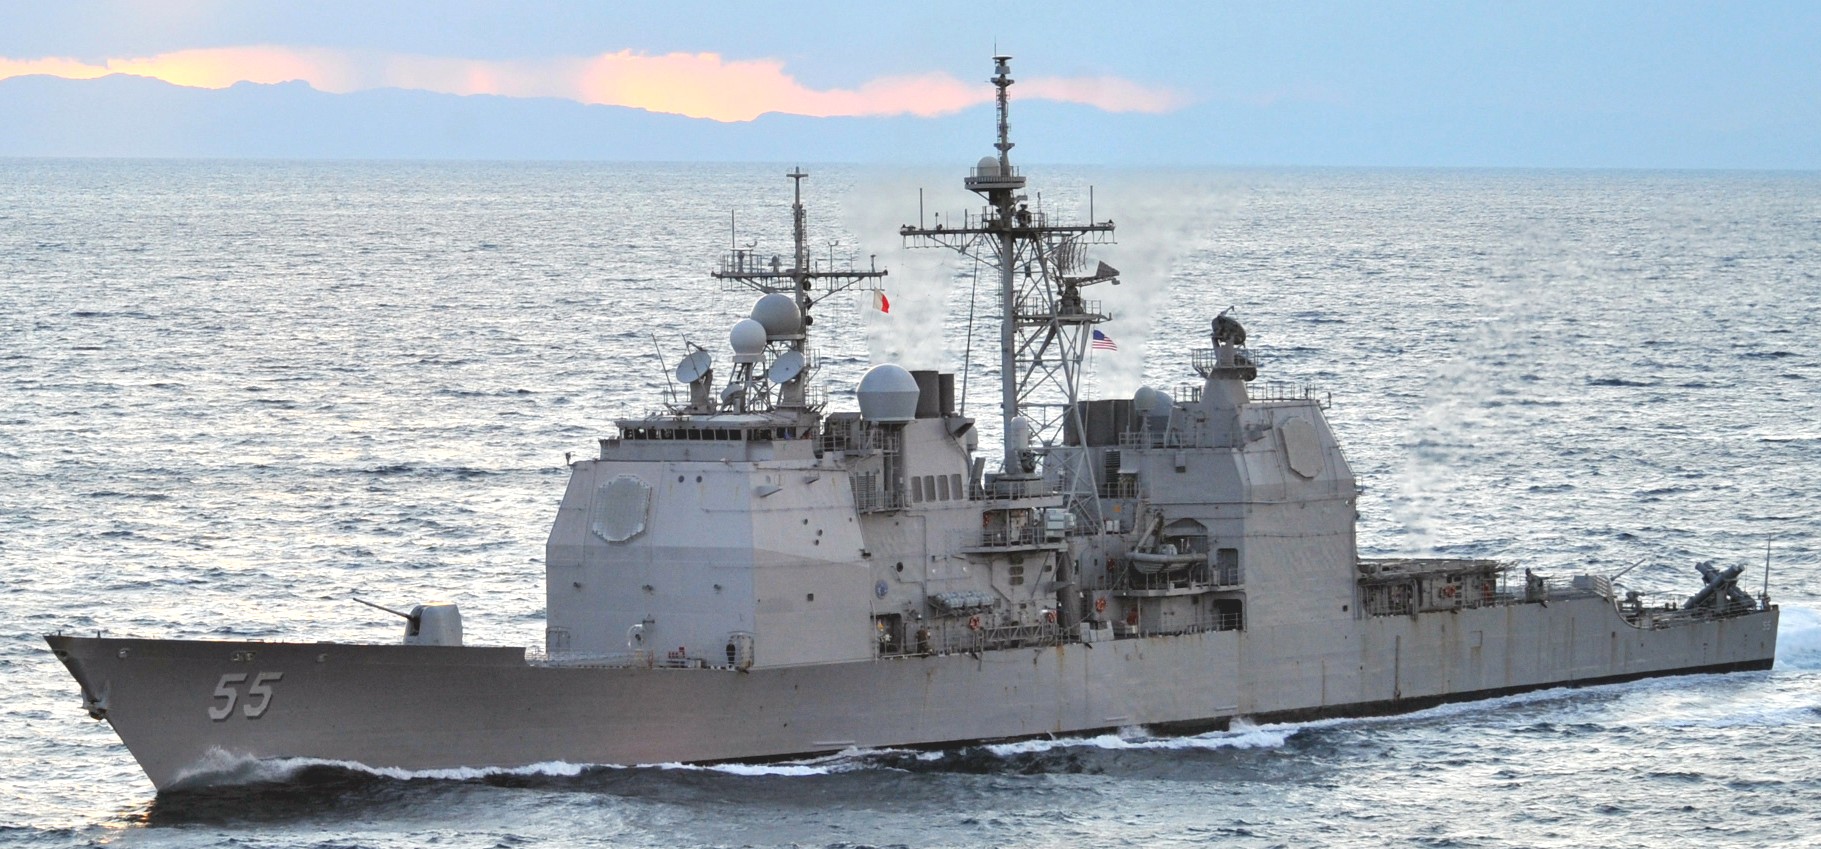 cg-55 uss leyte gulf ticonderoga class guided missile cruiser aegis us navy gibraltar 35